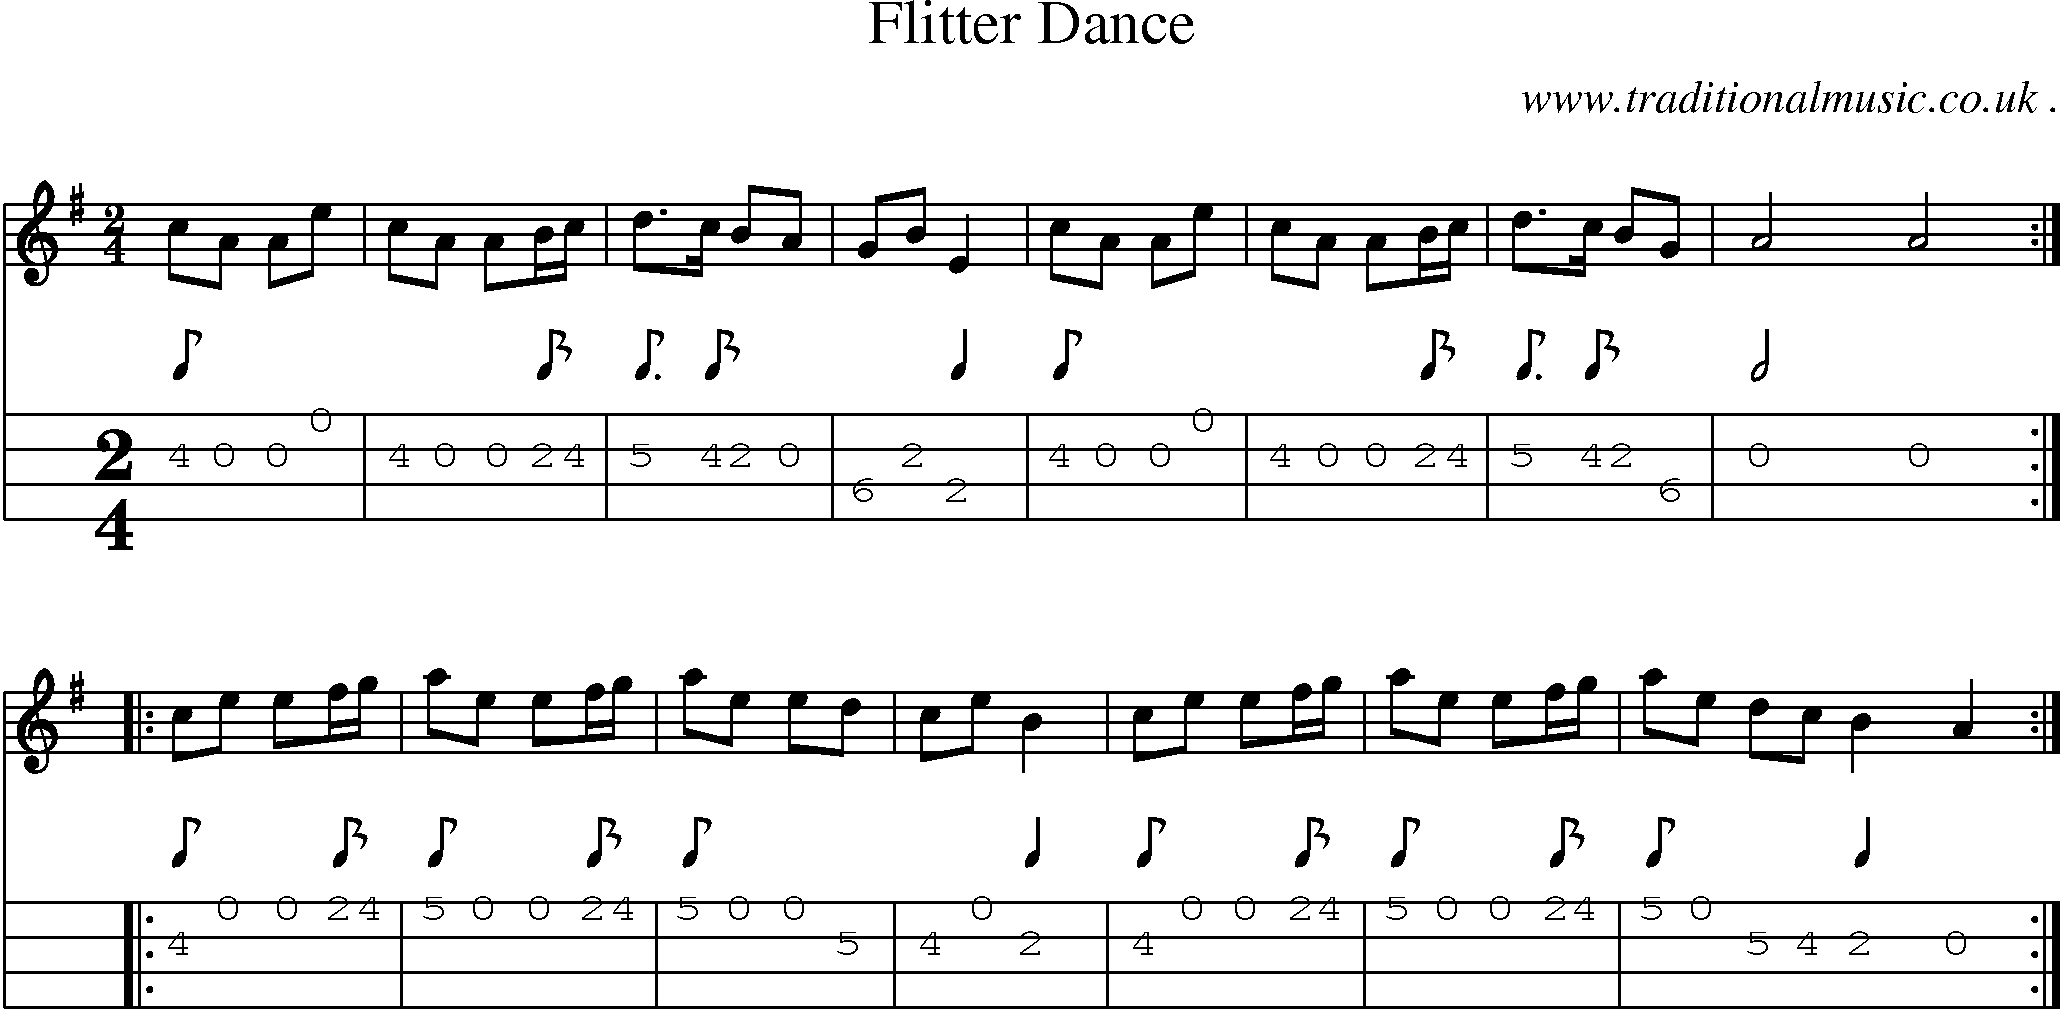 Sheet-Music and Mandolin Tabs for Flitter Dance